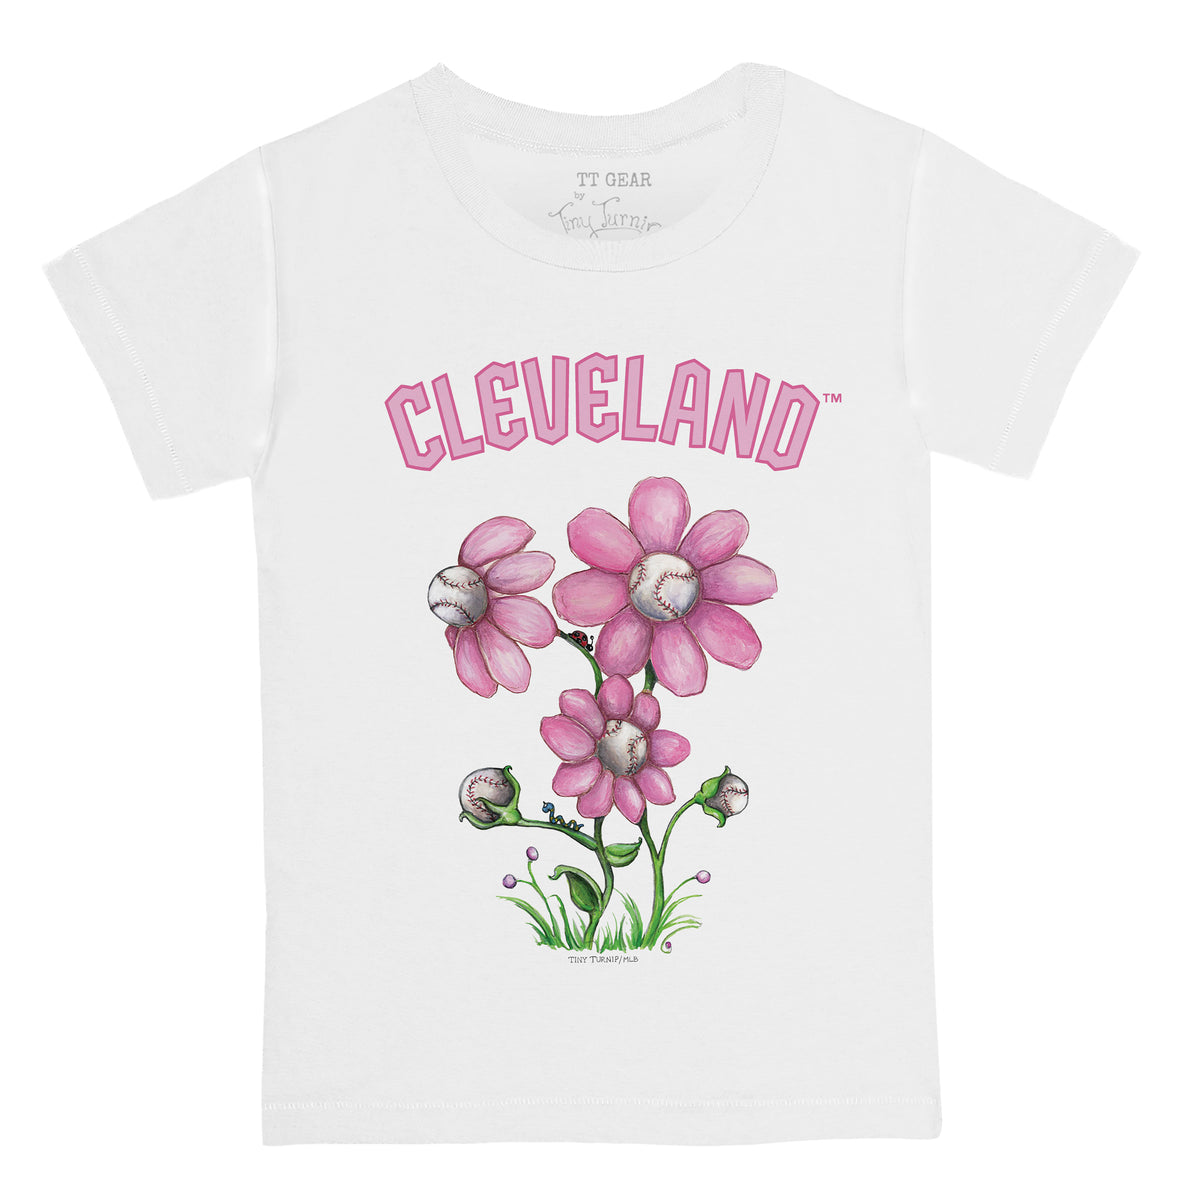 Cleveland Guardians Blooming Baseballs Tee Shirt